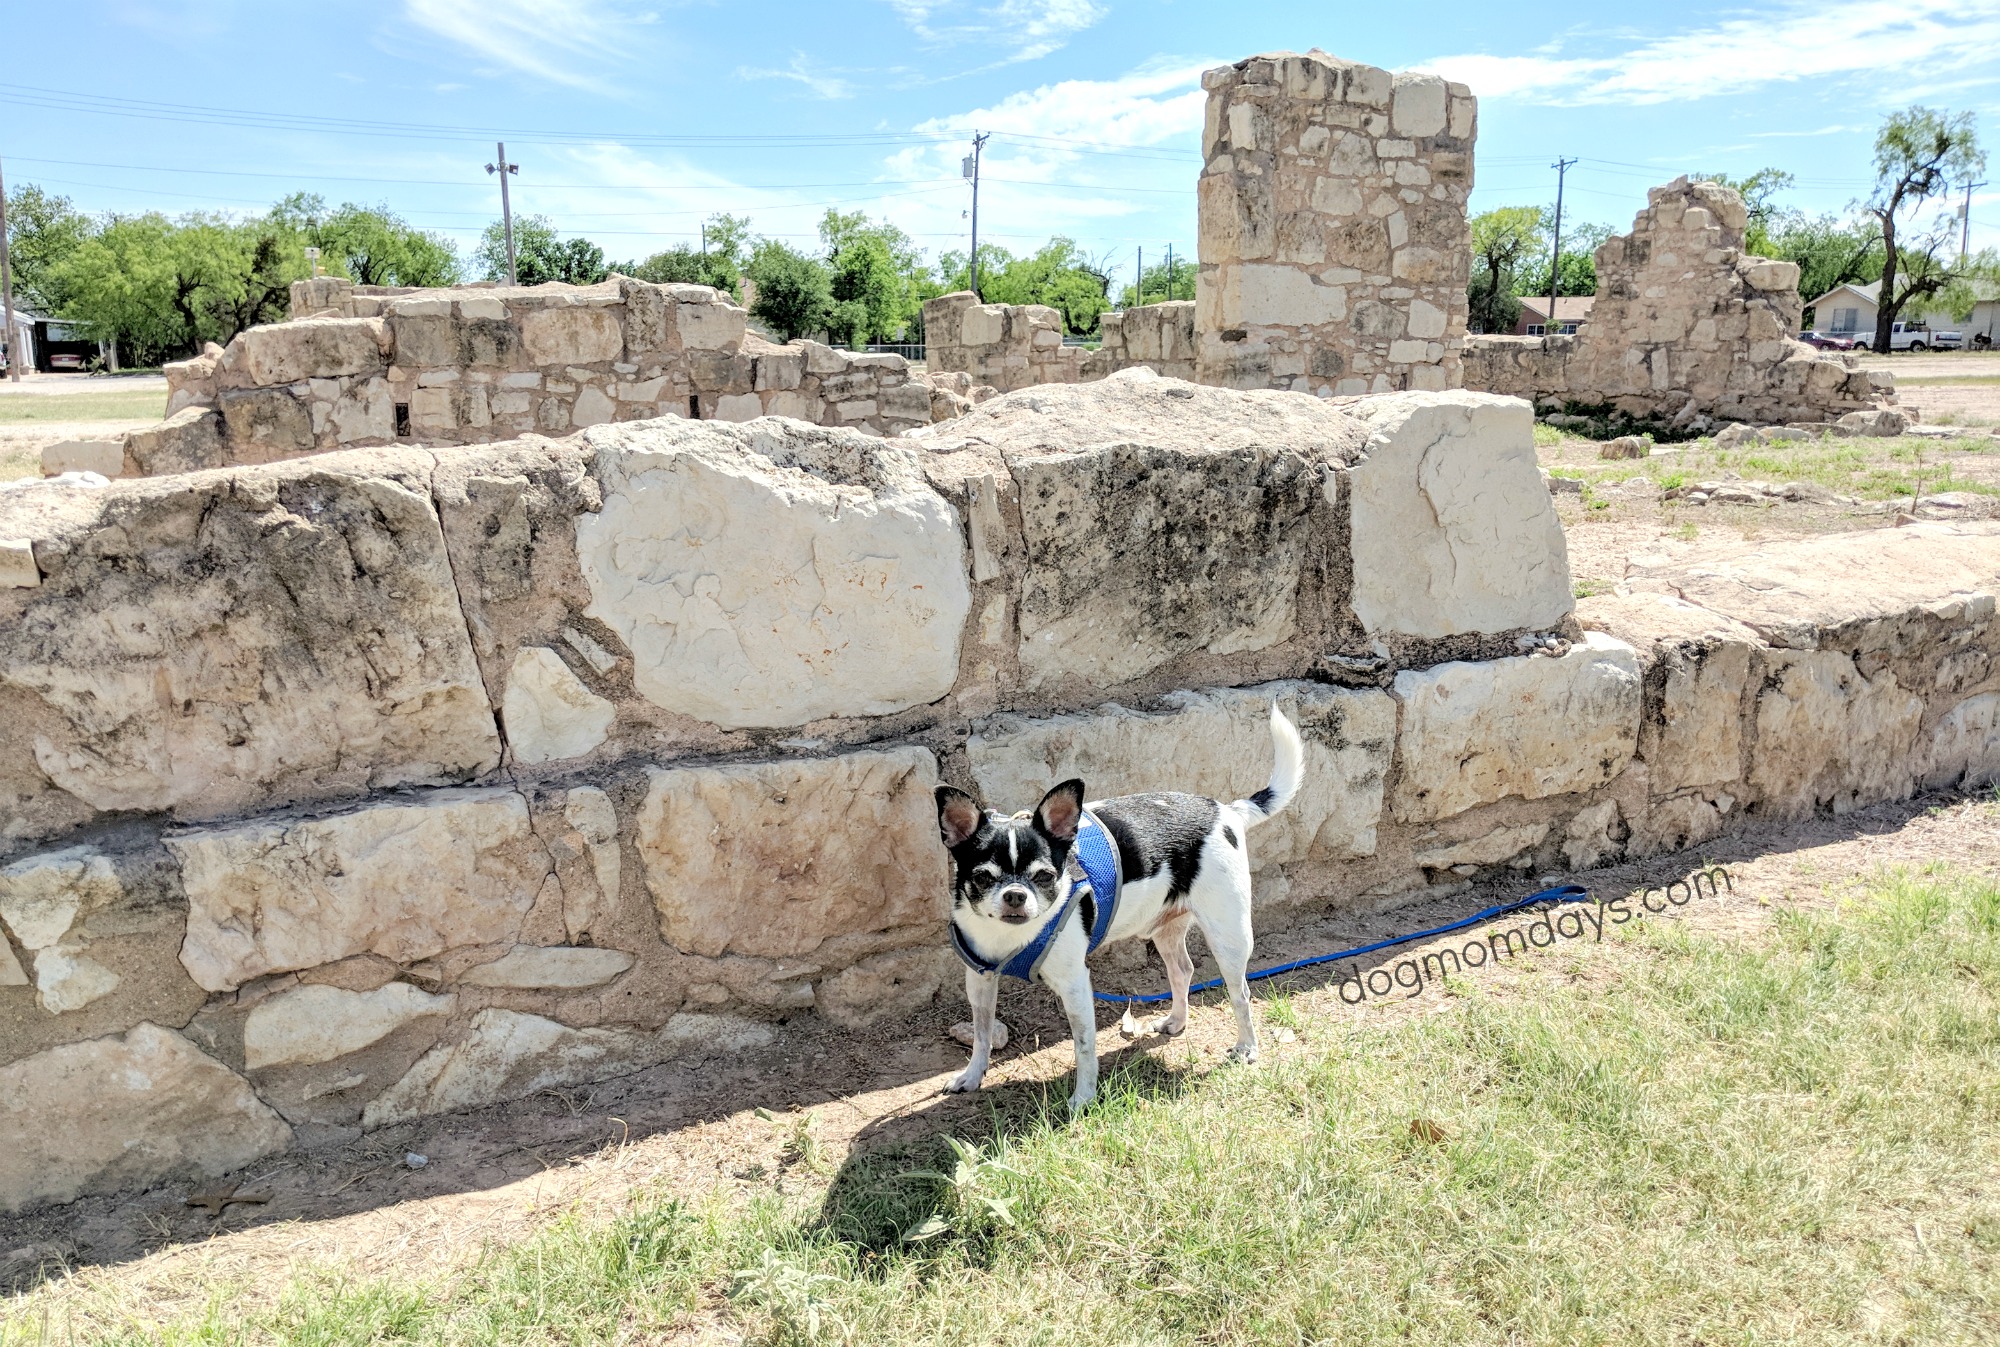 Dog-friendly Fort Concho